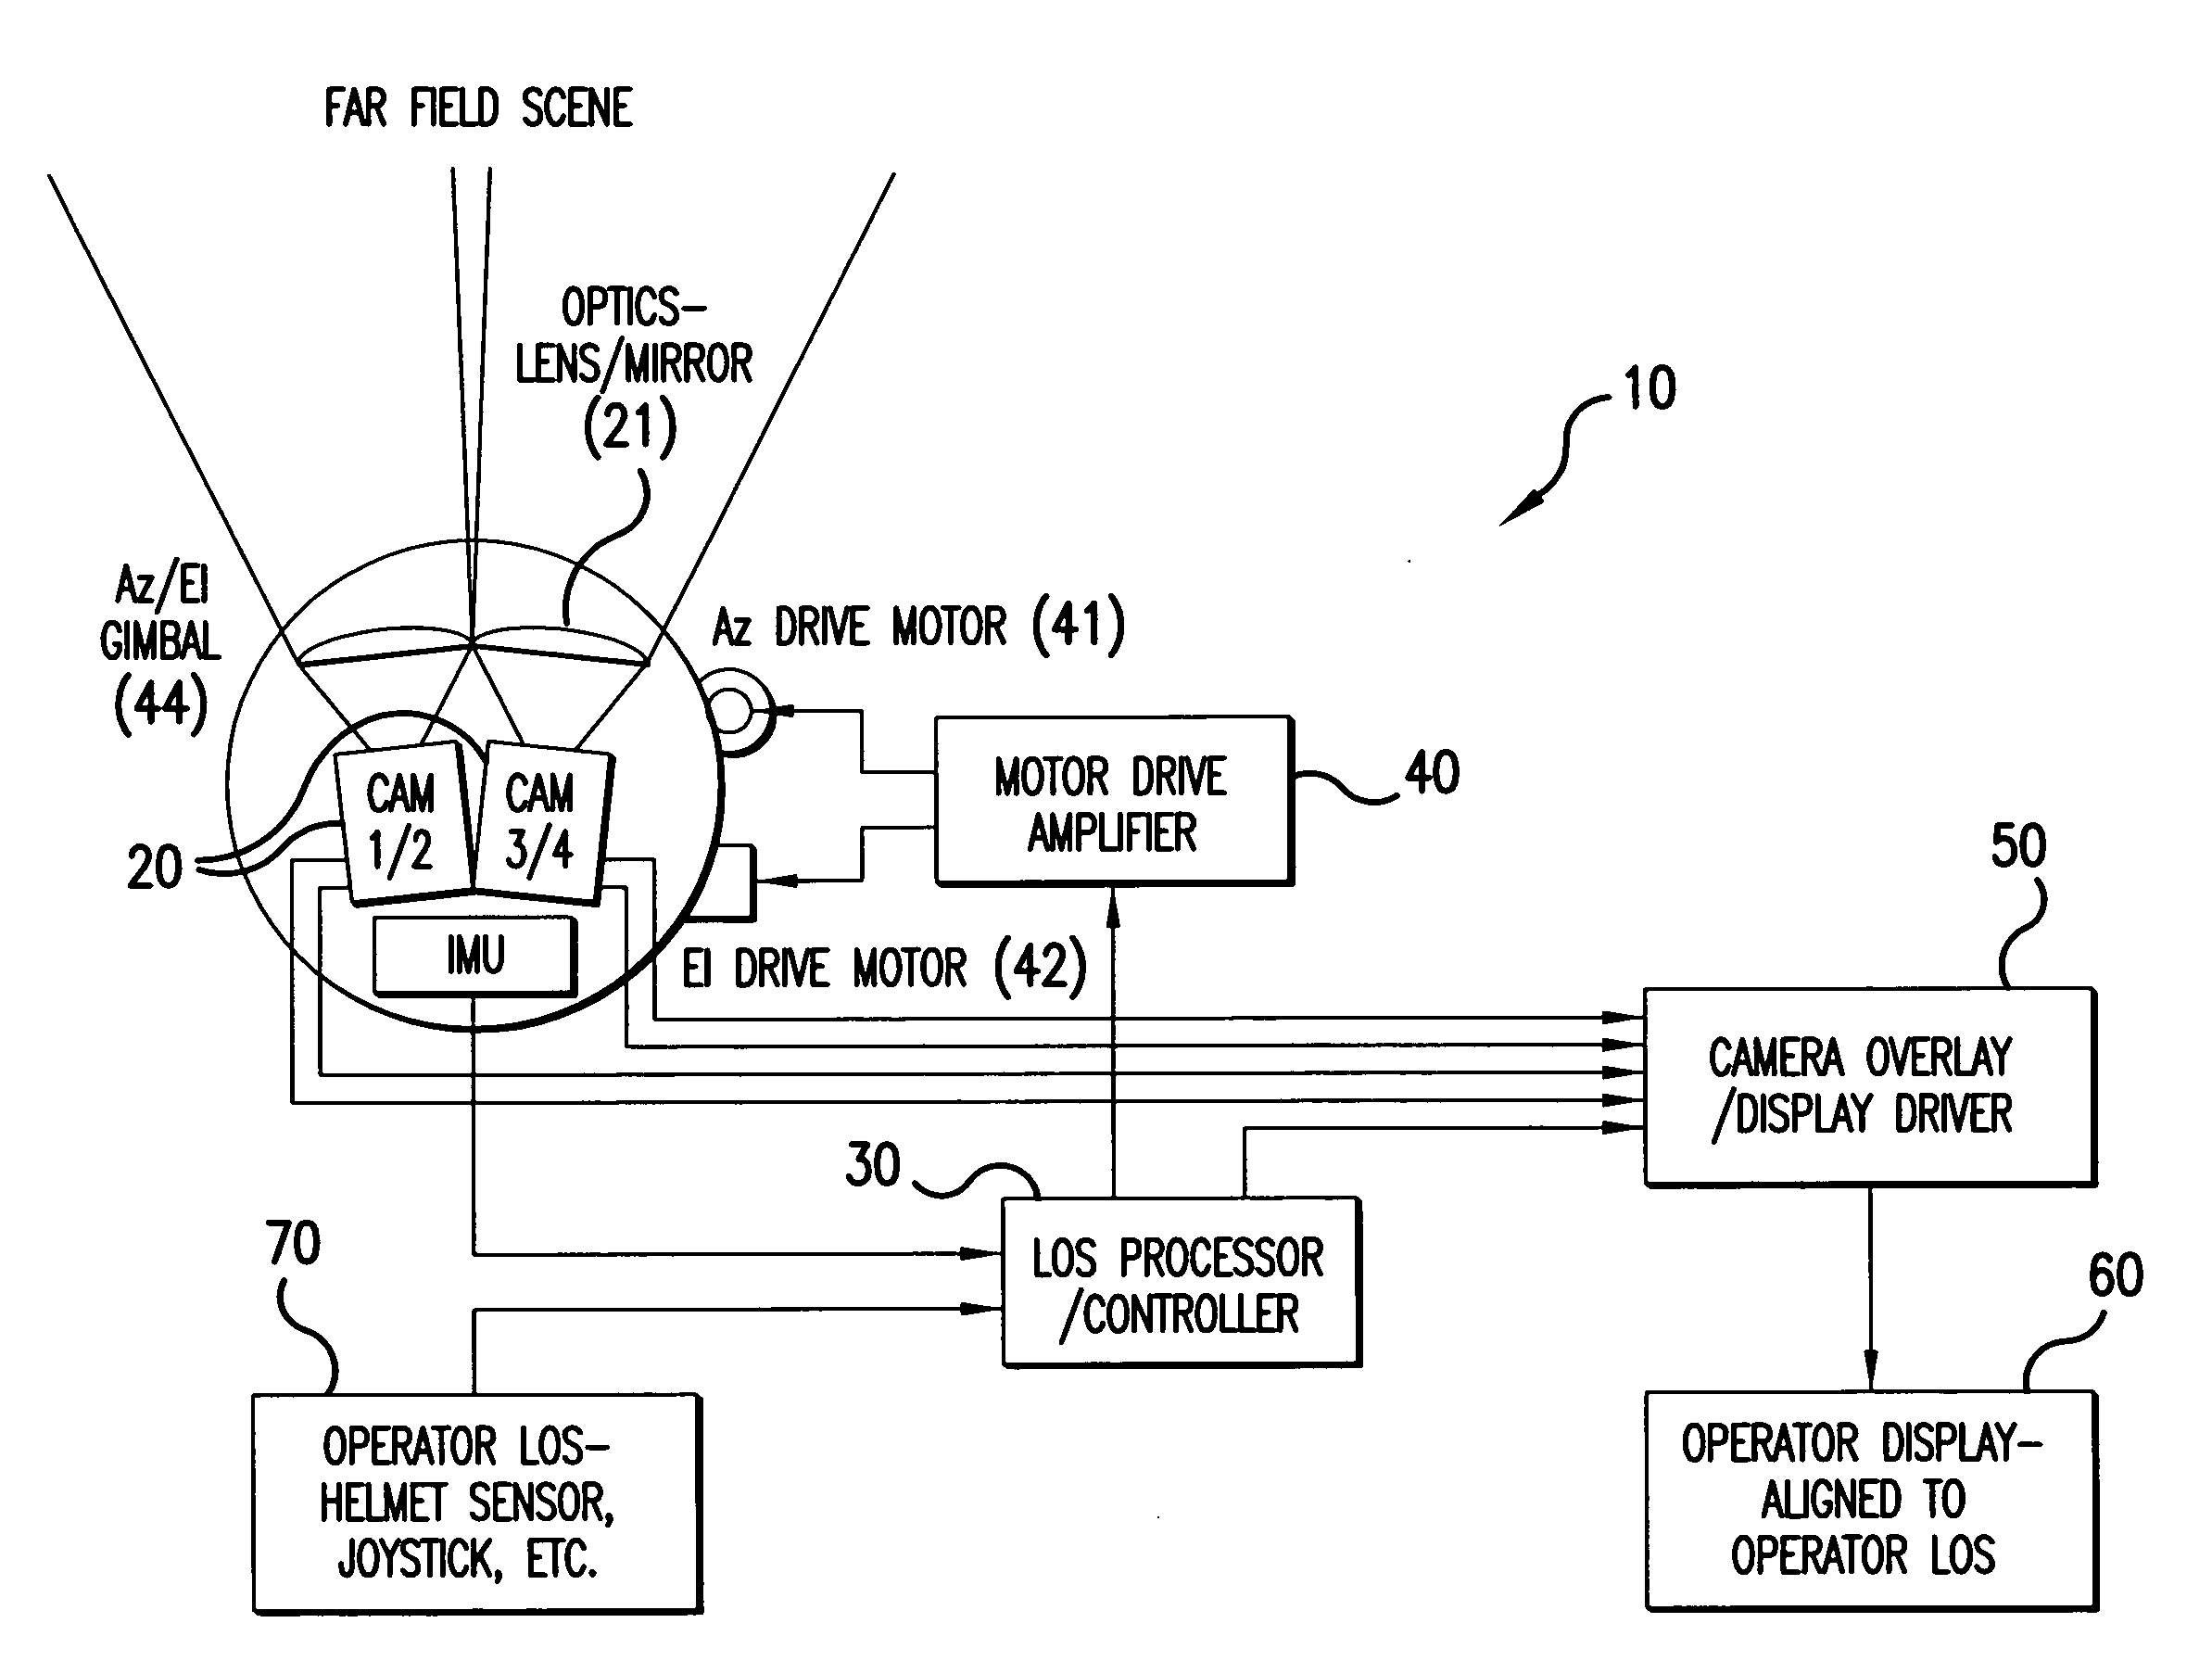 Zero-lag image response to pilot head mounted display control